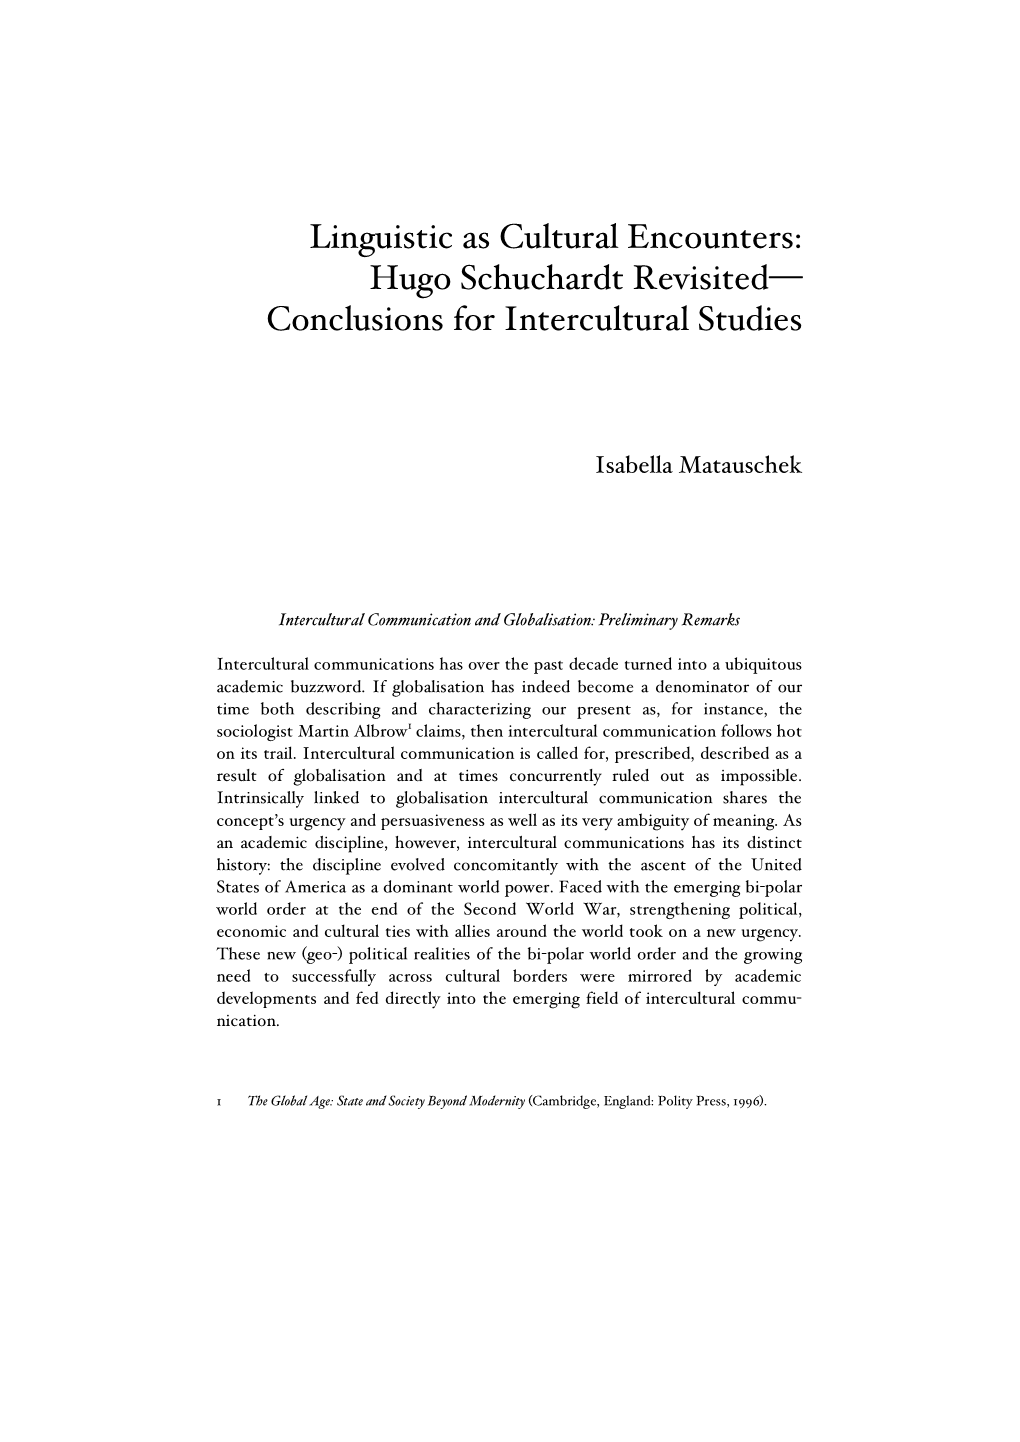 Linguistic As Cultural Encounters: Hugo Schuchardt Revisited— Conclusions for Intercultural Studies